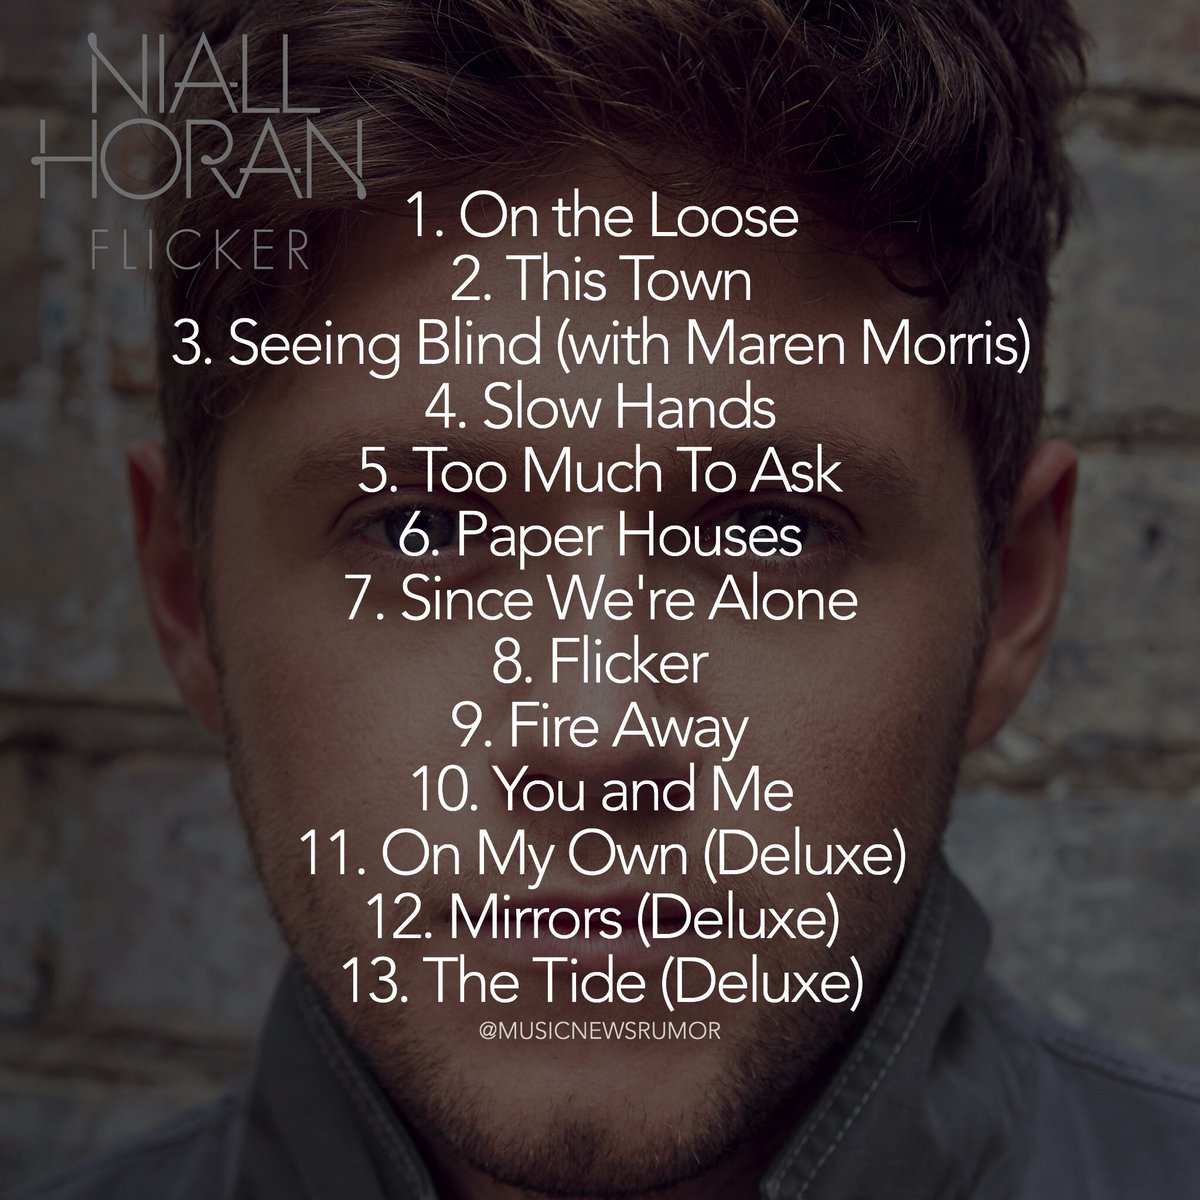 Niall Horan Album Full List